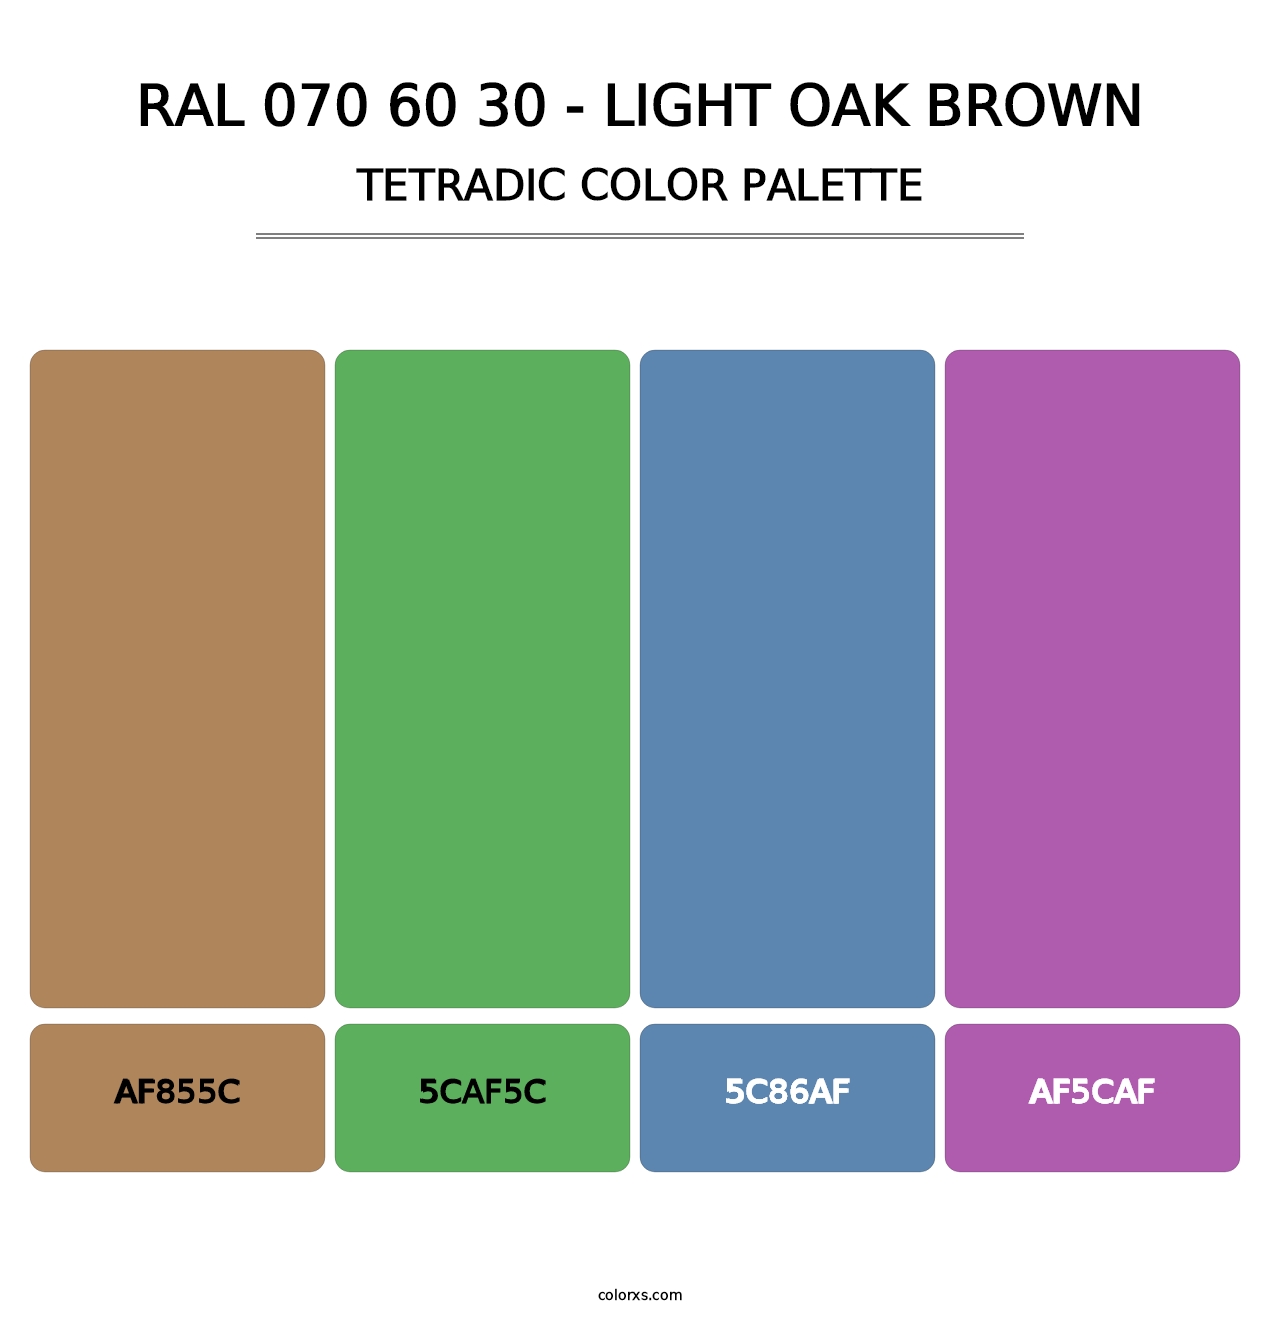 RAL 070 60 30 - Light Oak Brown - Tetradic Color Palette